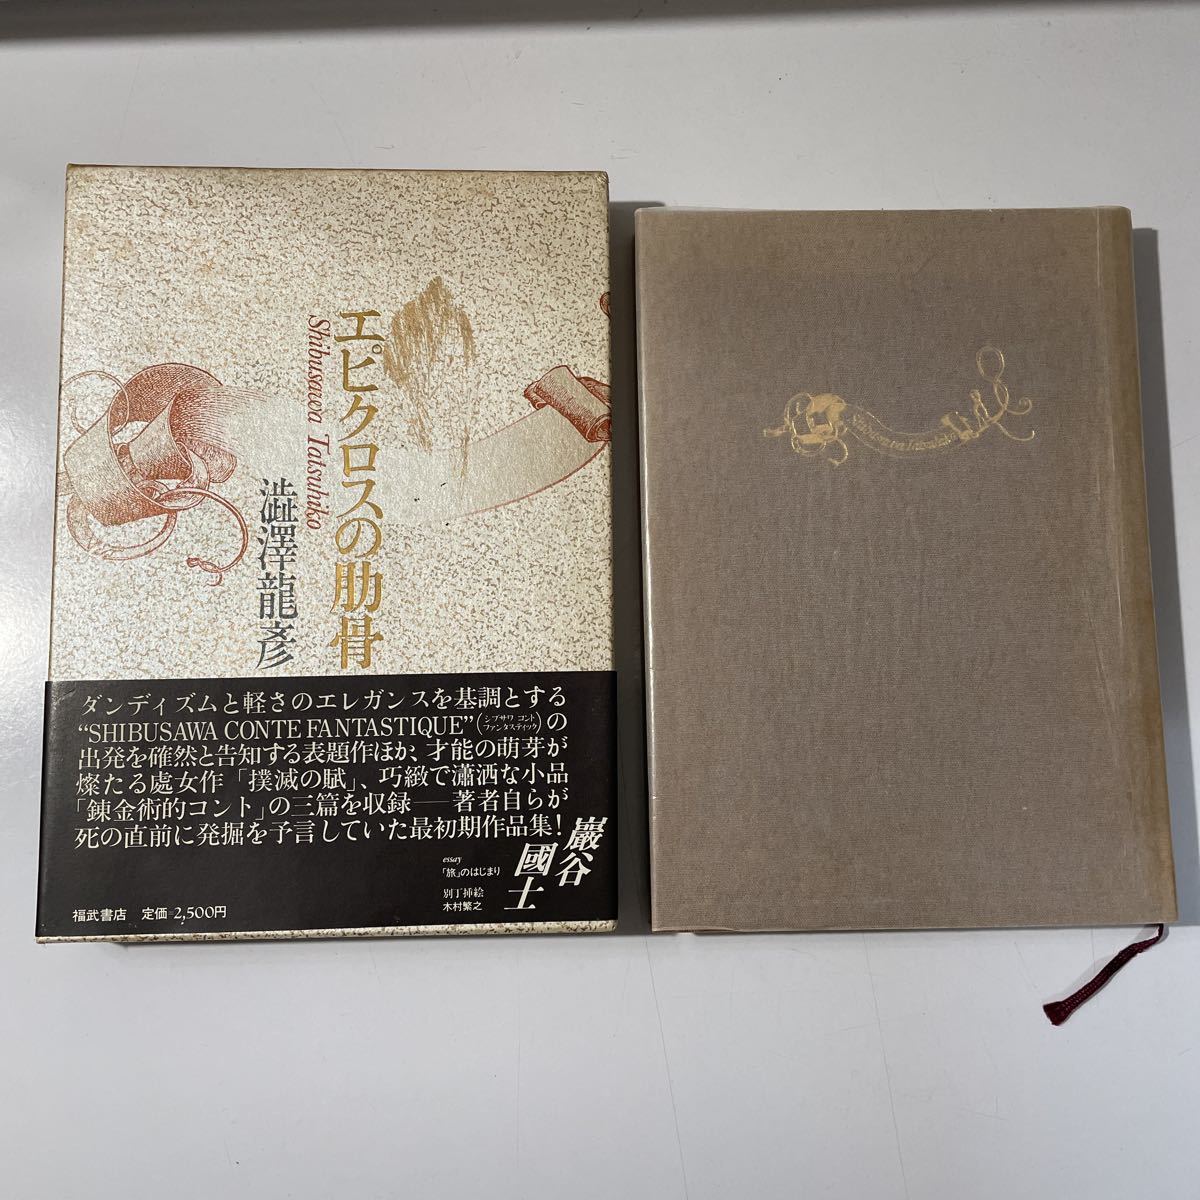 Tatsuhiko shibusawa epicross ребра девственная девственная работа записано первое издание парафиновой бумаги